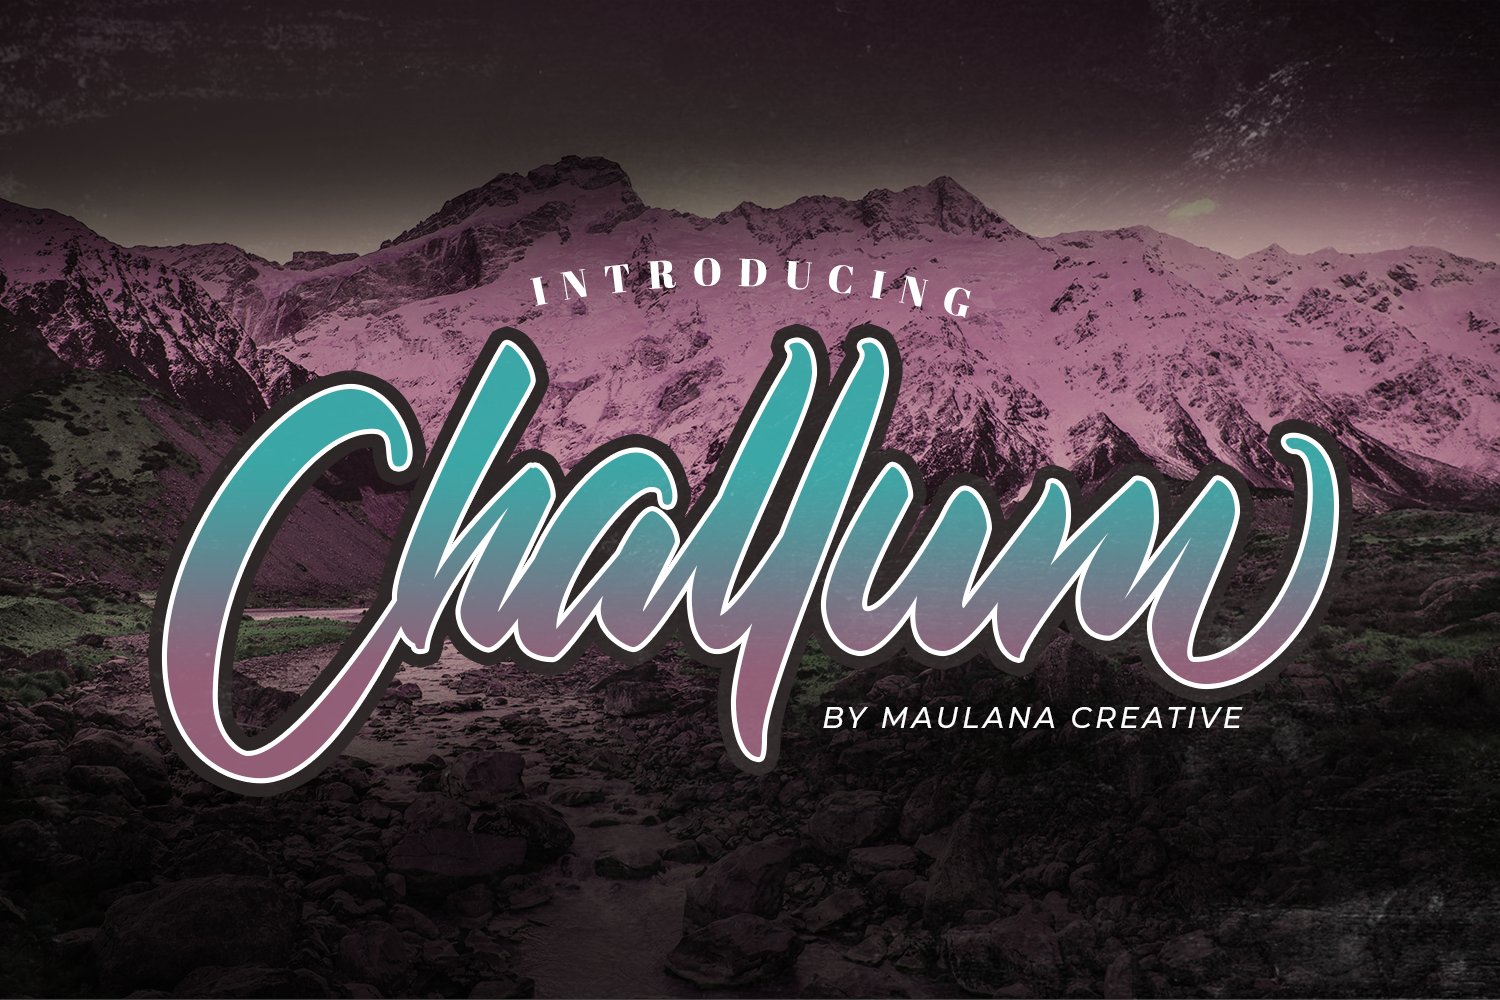 Challum Handwritten Script Font cover image.